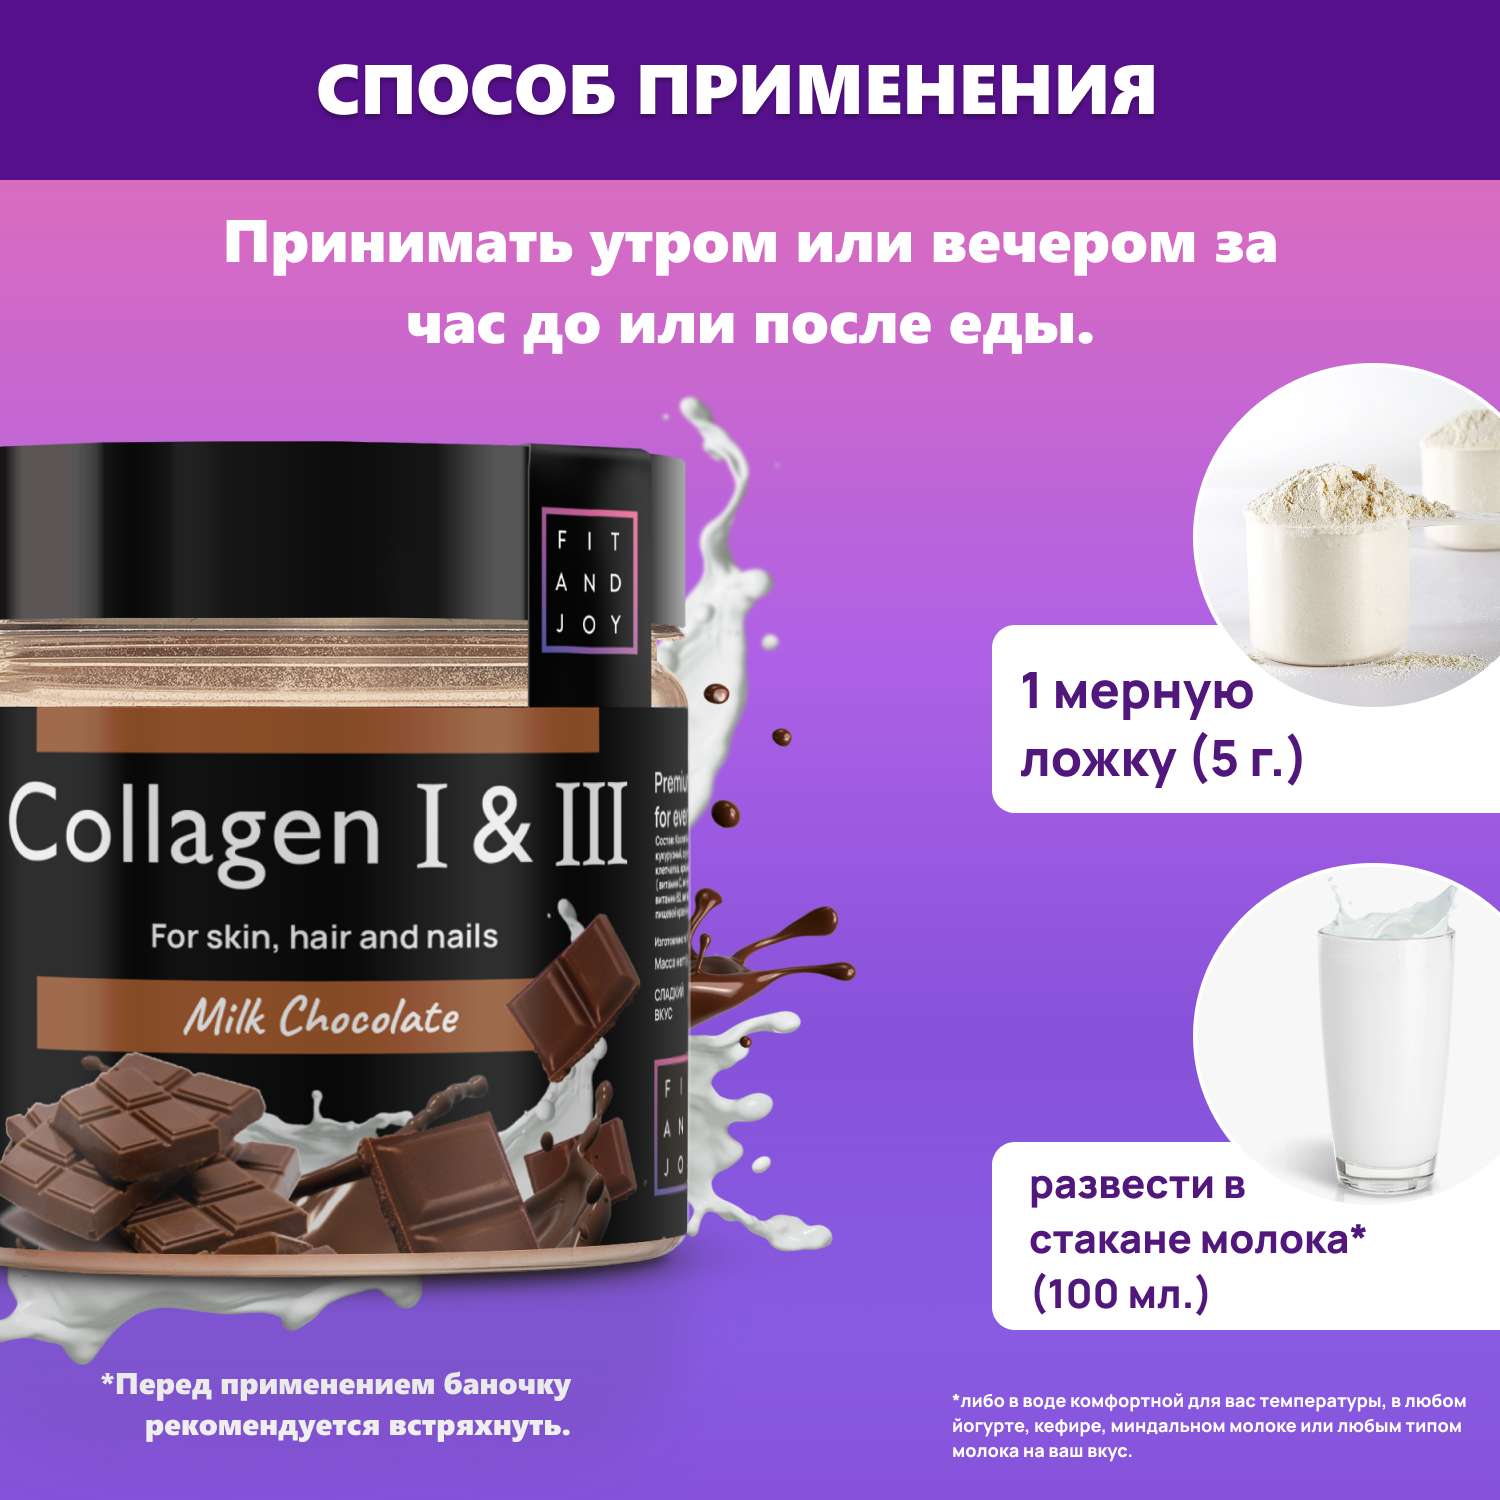 Коллаген FIT AND JOY Молочный Шоколад - фото 5